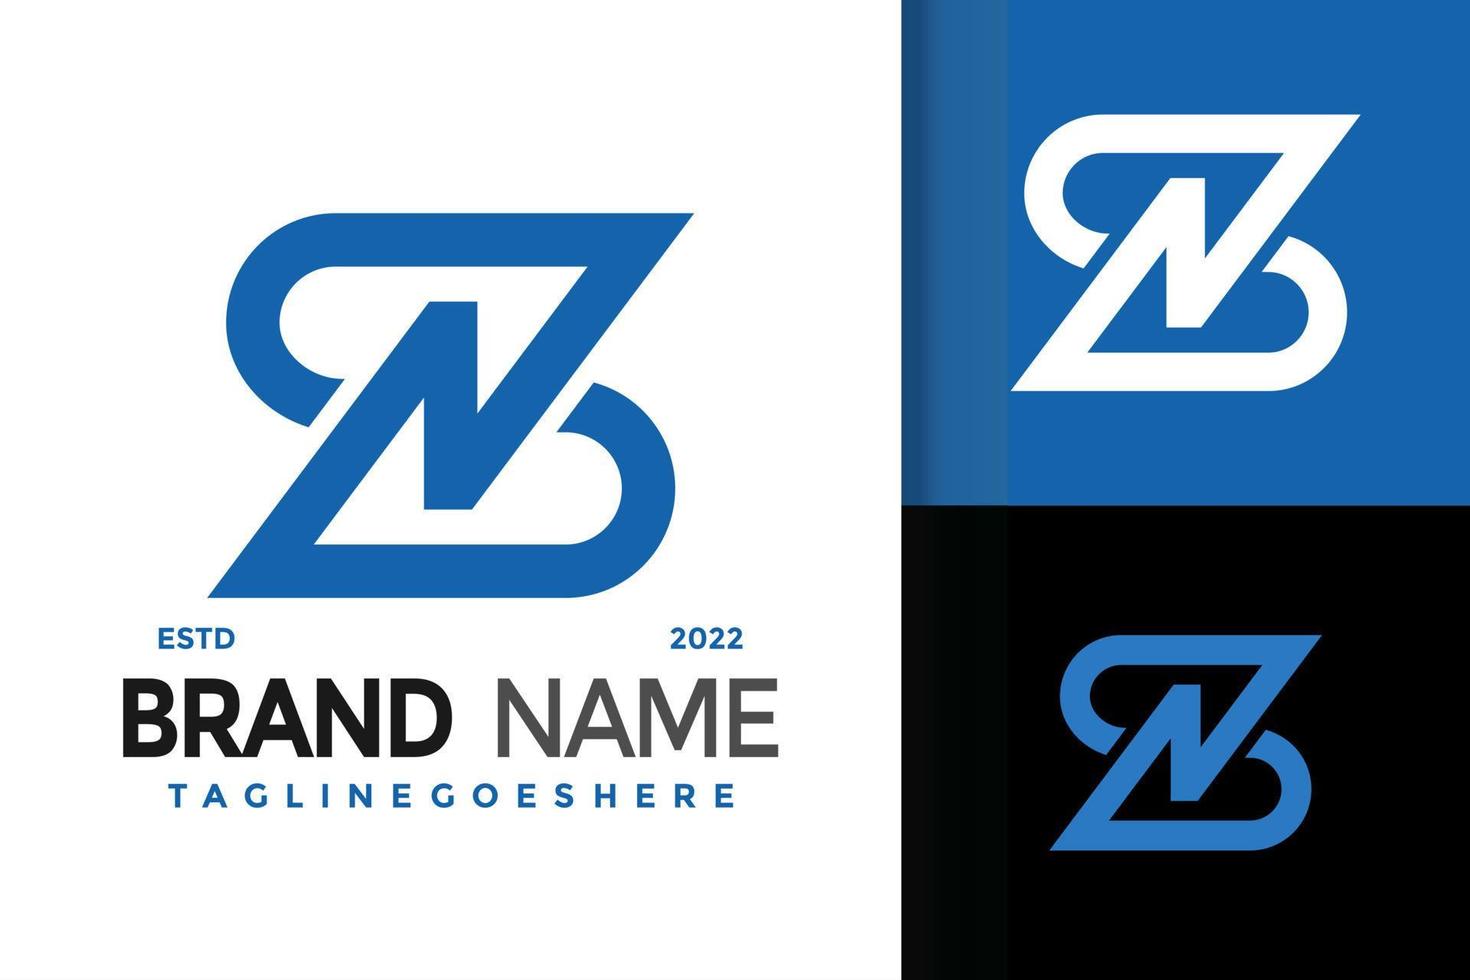 Letter Sn or Ns Logo Design, brand identity logos vector, modern logo, Logo Designs Vector Illustration Template